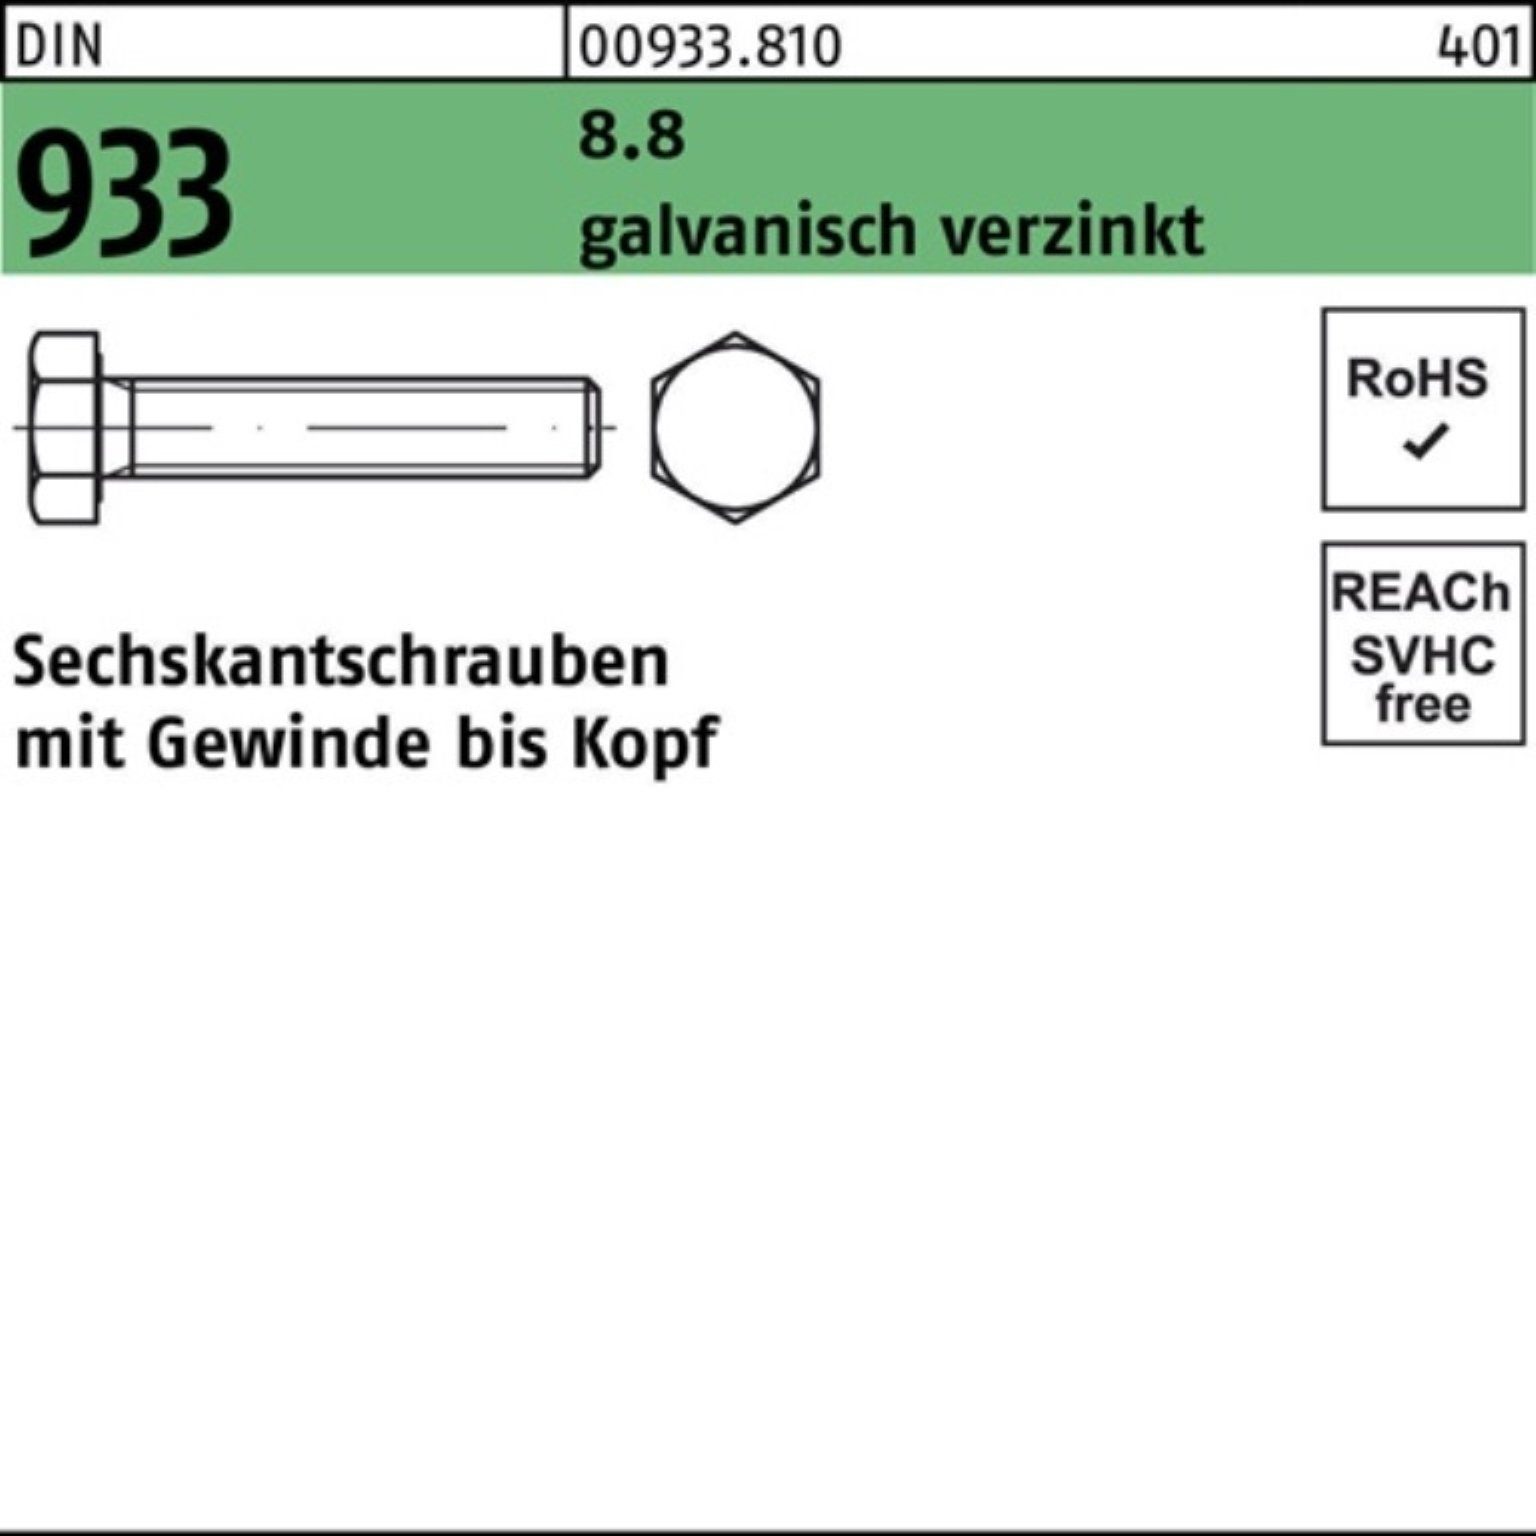 VG Sechskantschraube 100er Reyher 933 Sechskantschraube 25 8.8 Stü DIN Pack M22x galv.verz. 80